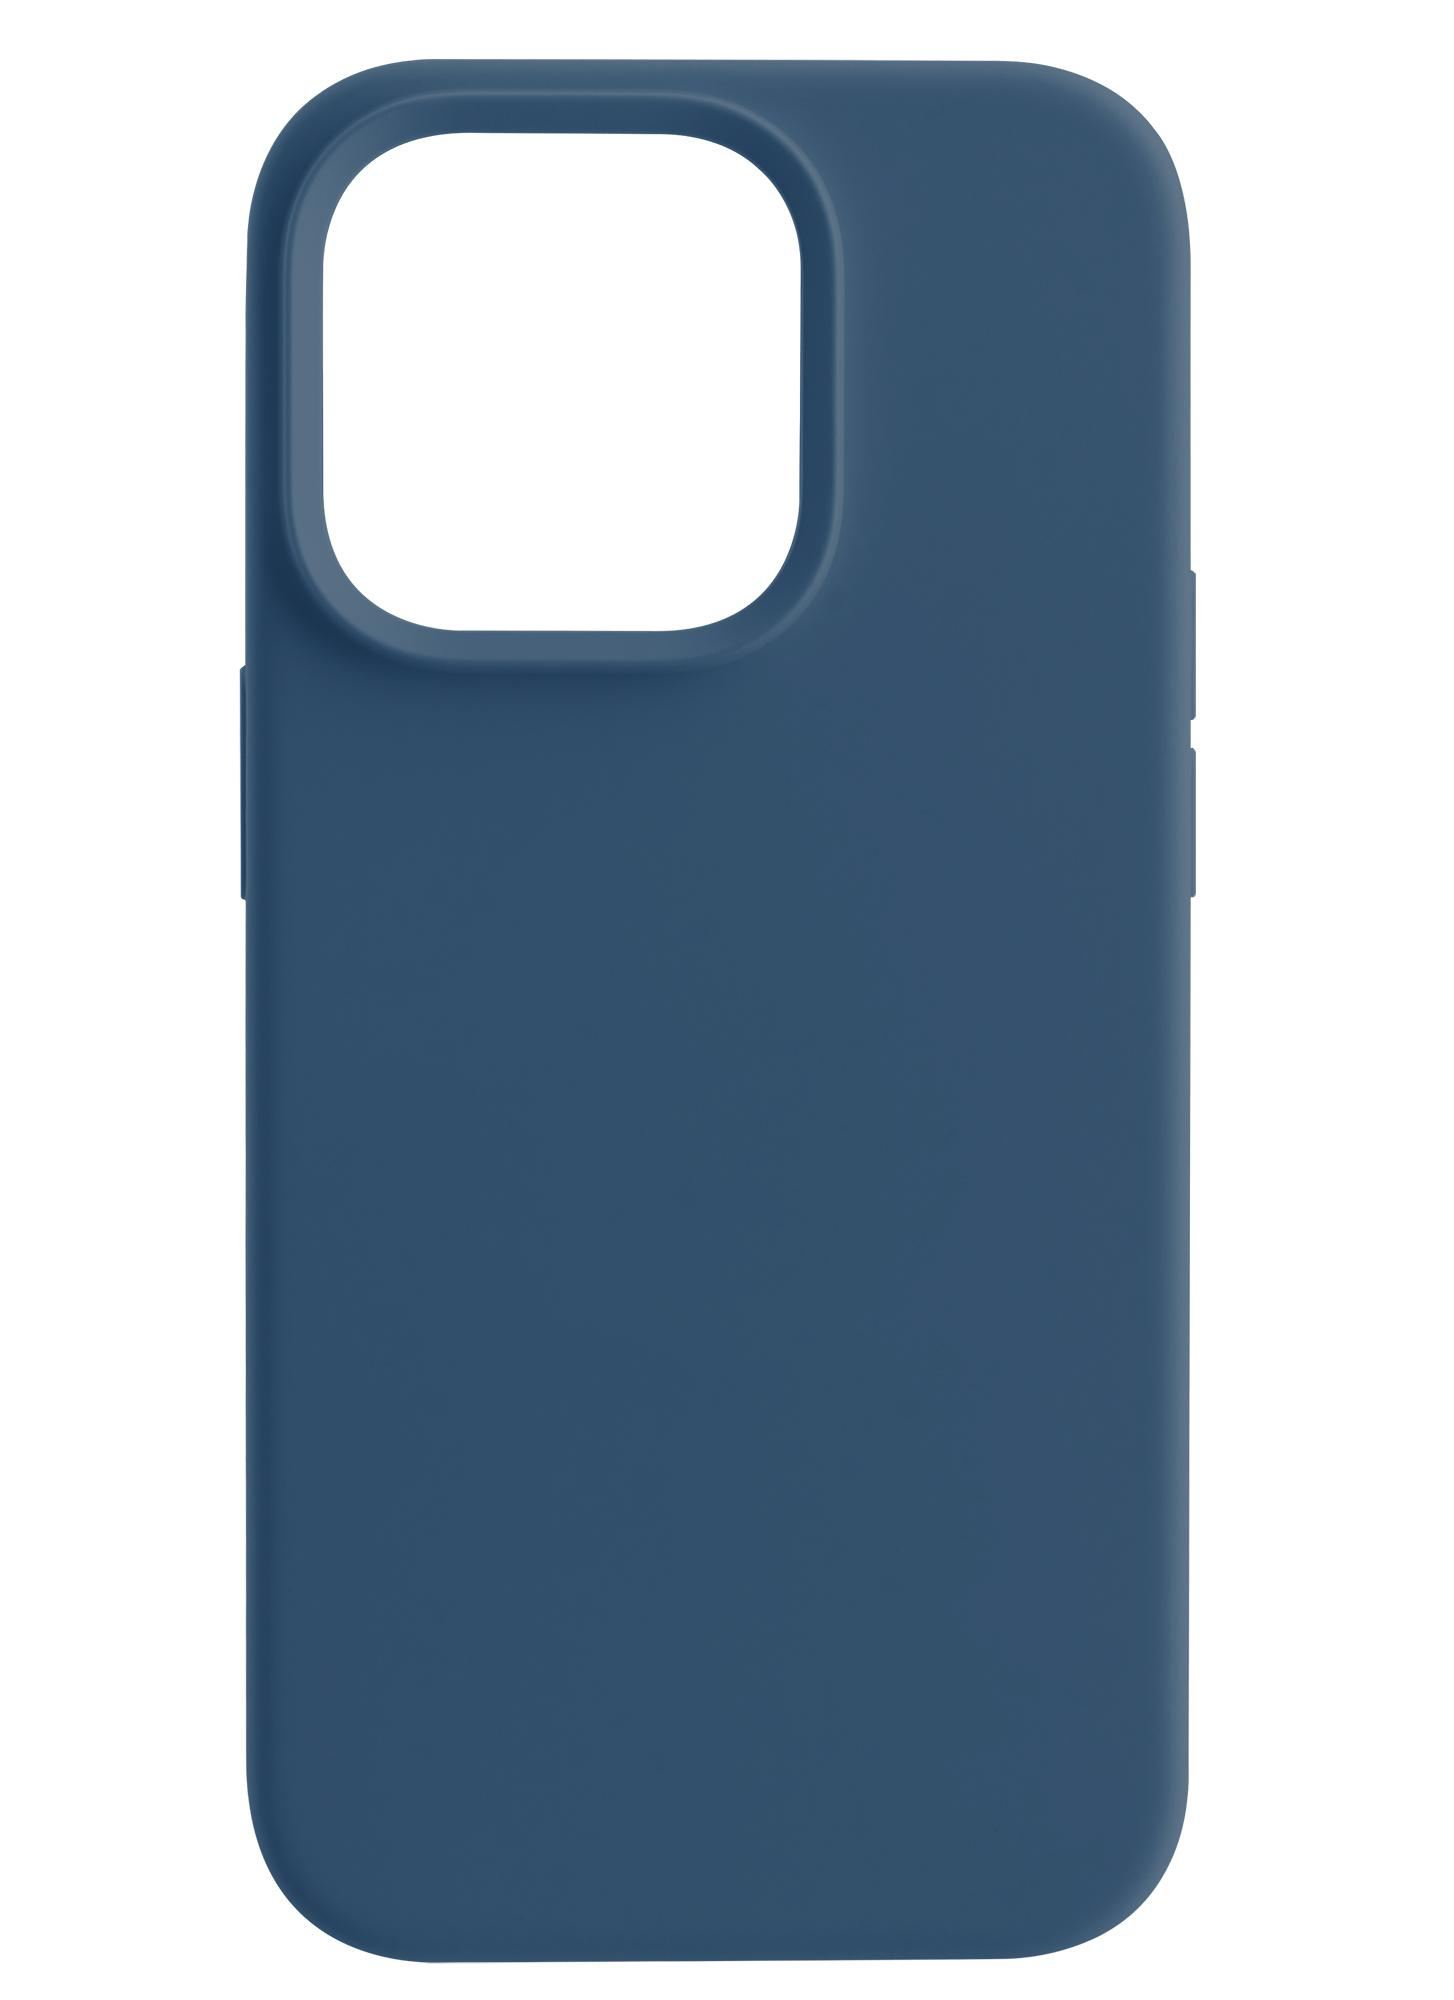 VIVANCO Mag Hype, iPhone 14 Blau Apple, Pro, Backcover